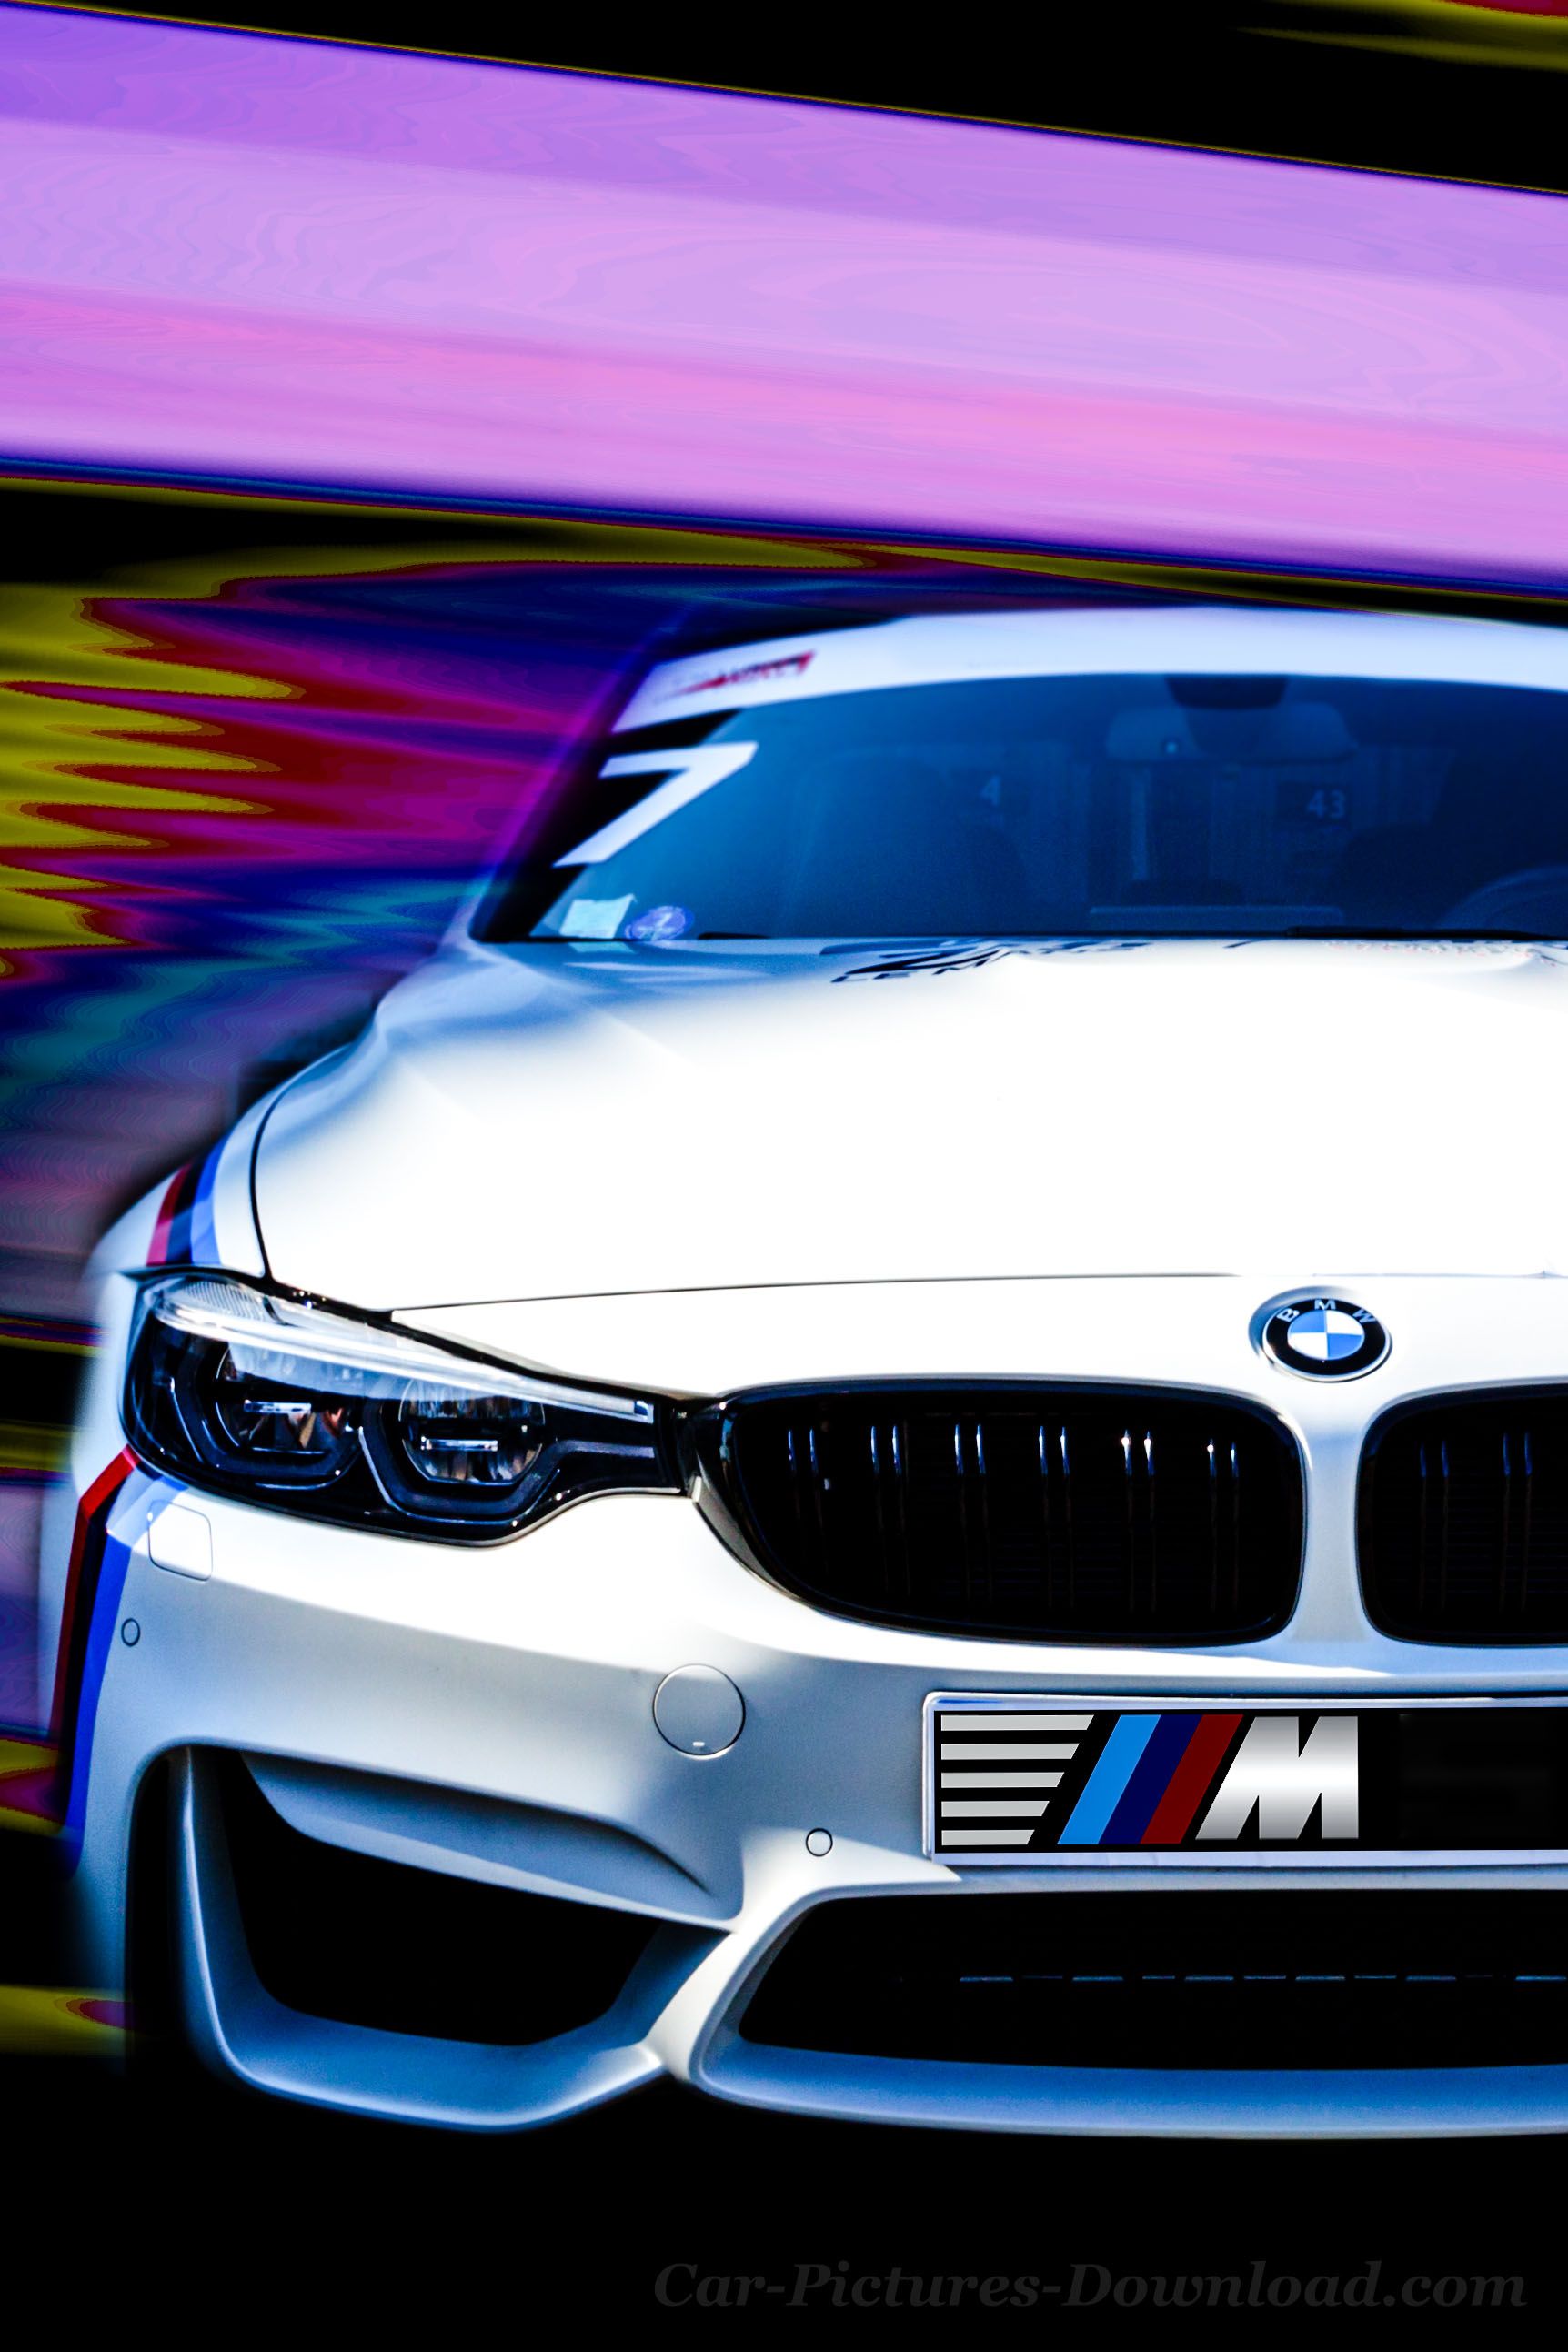 BMW M3 Wallpaper Picture All Desktop & Mobile